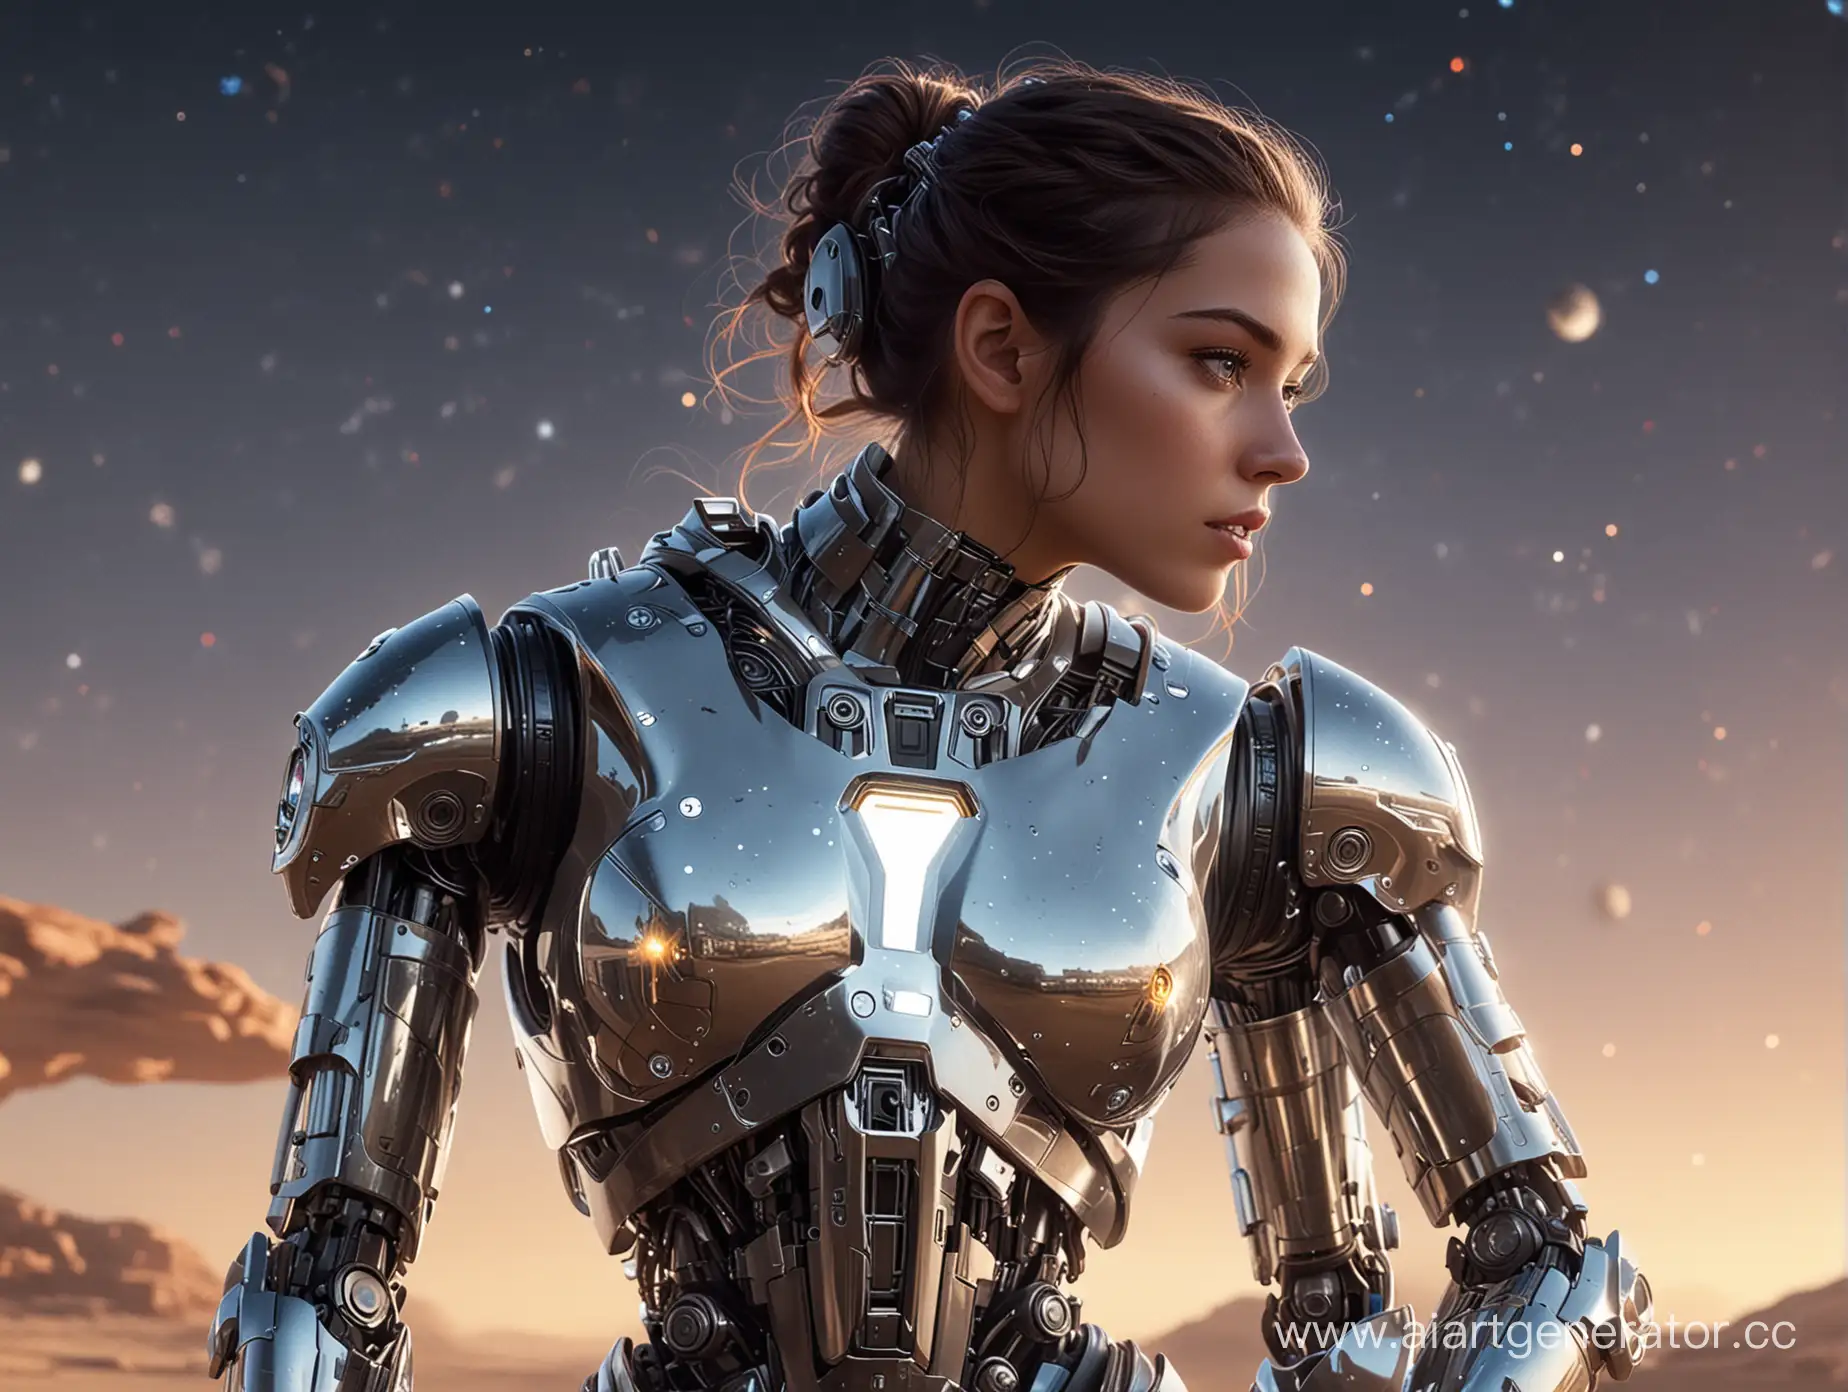 Girl-Exploring-Chrome-Robot-in-Star-Wars-Inspired-Cosmic-Landscape